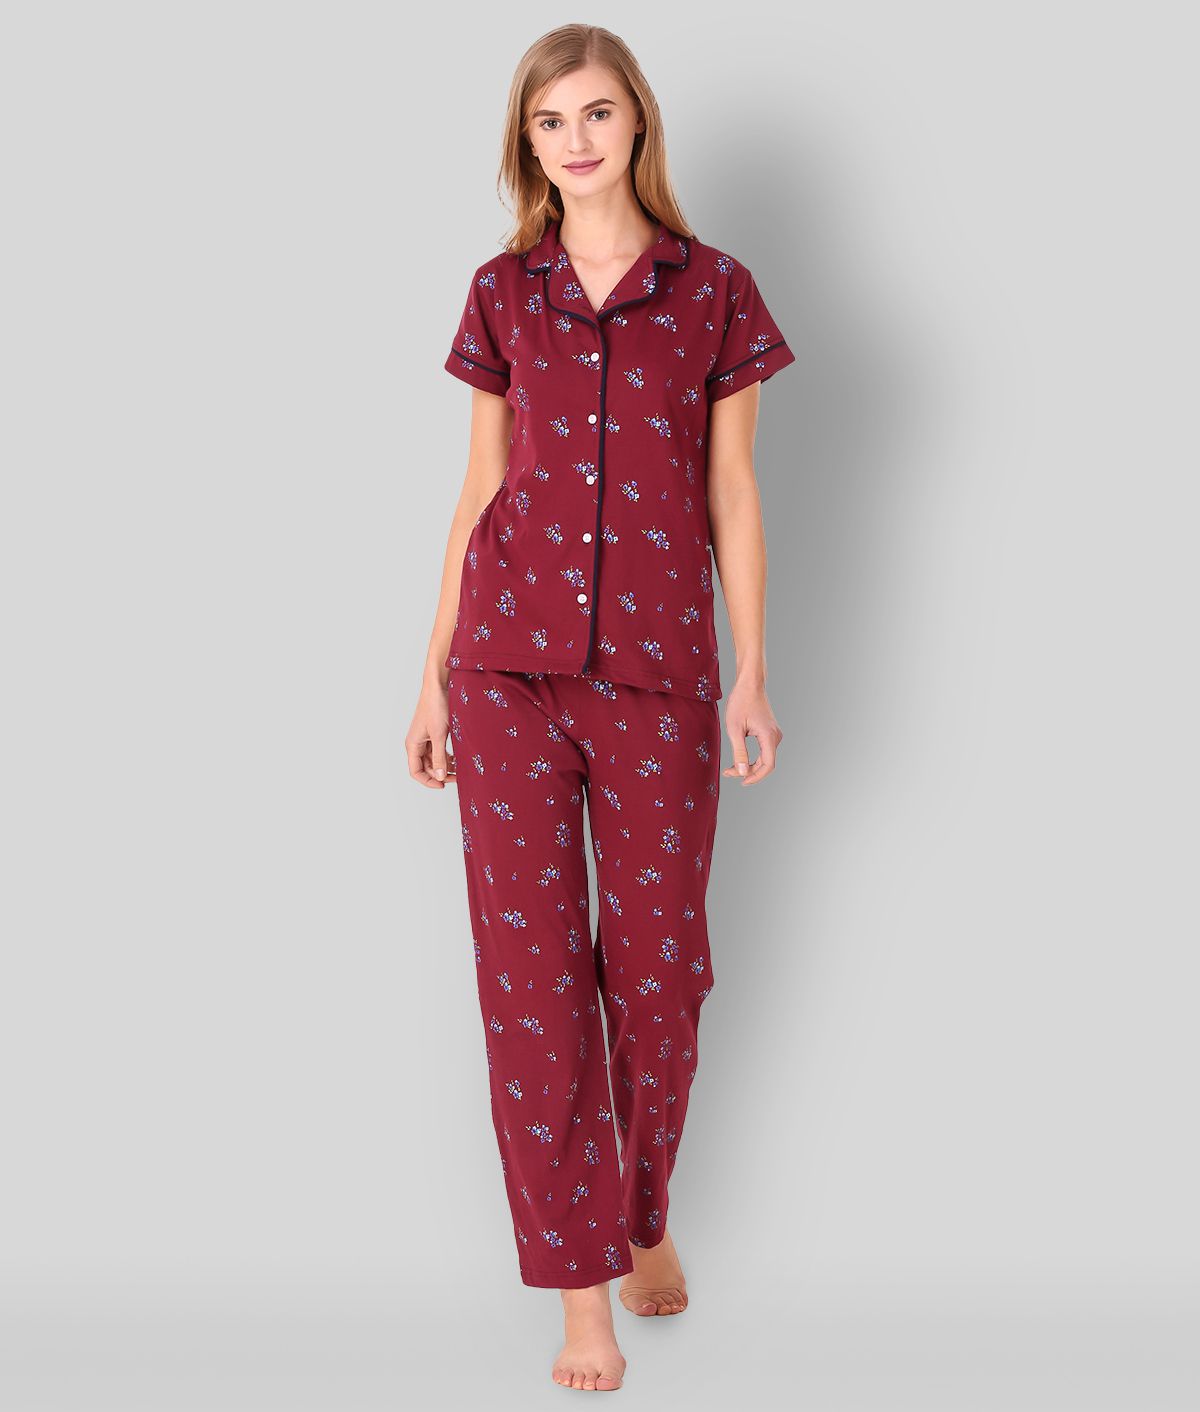     			Masha - Maroon Cotton Women's Nightwear Nightsuit Sets ( Pack of 1 )